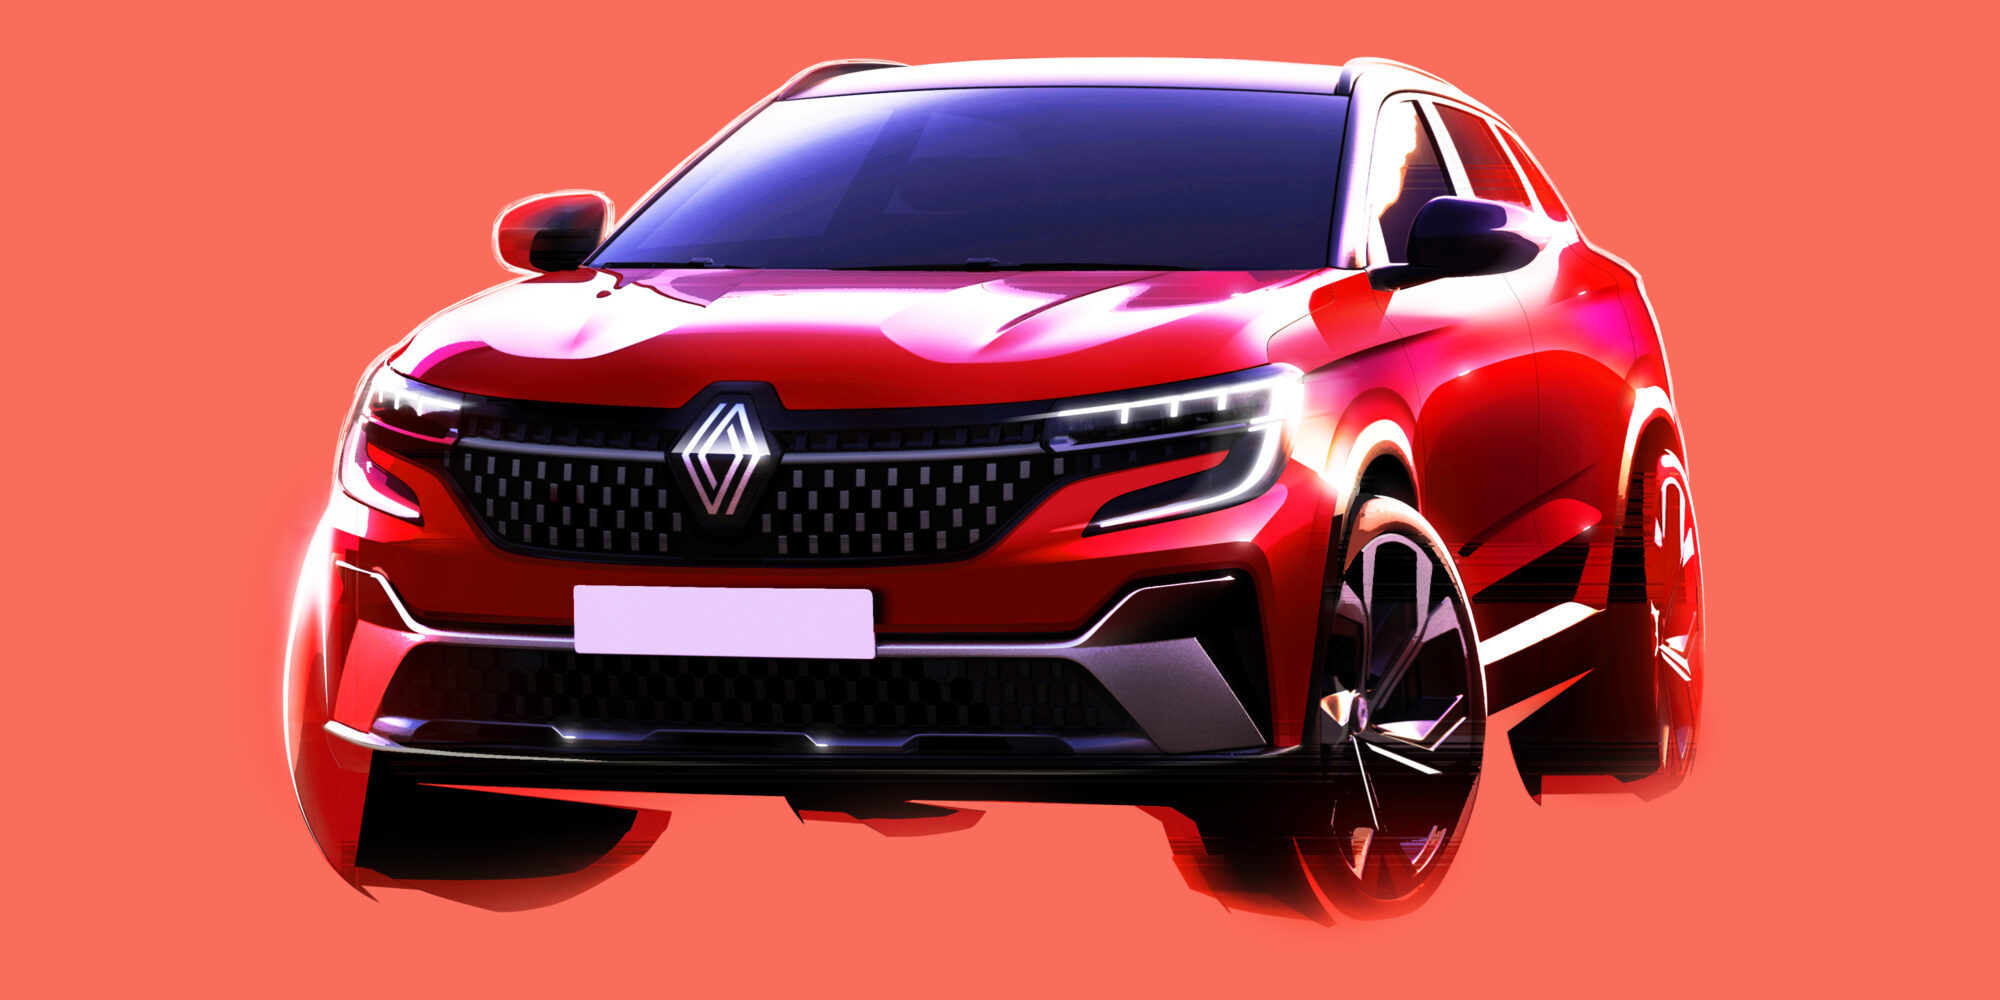 All-new Renault Austral - Design